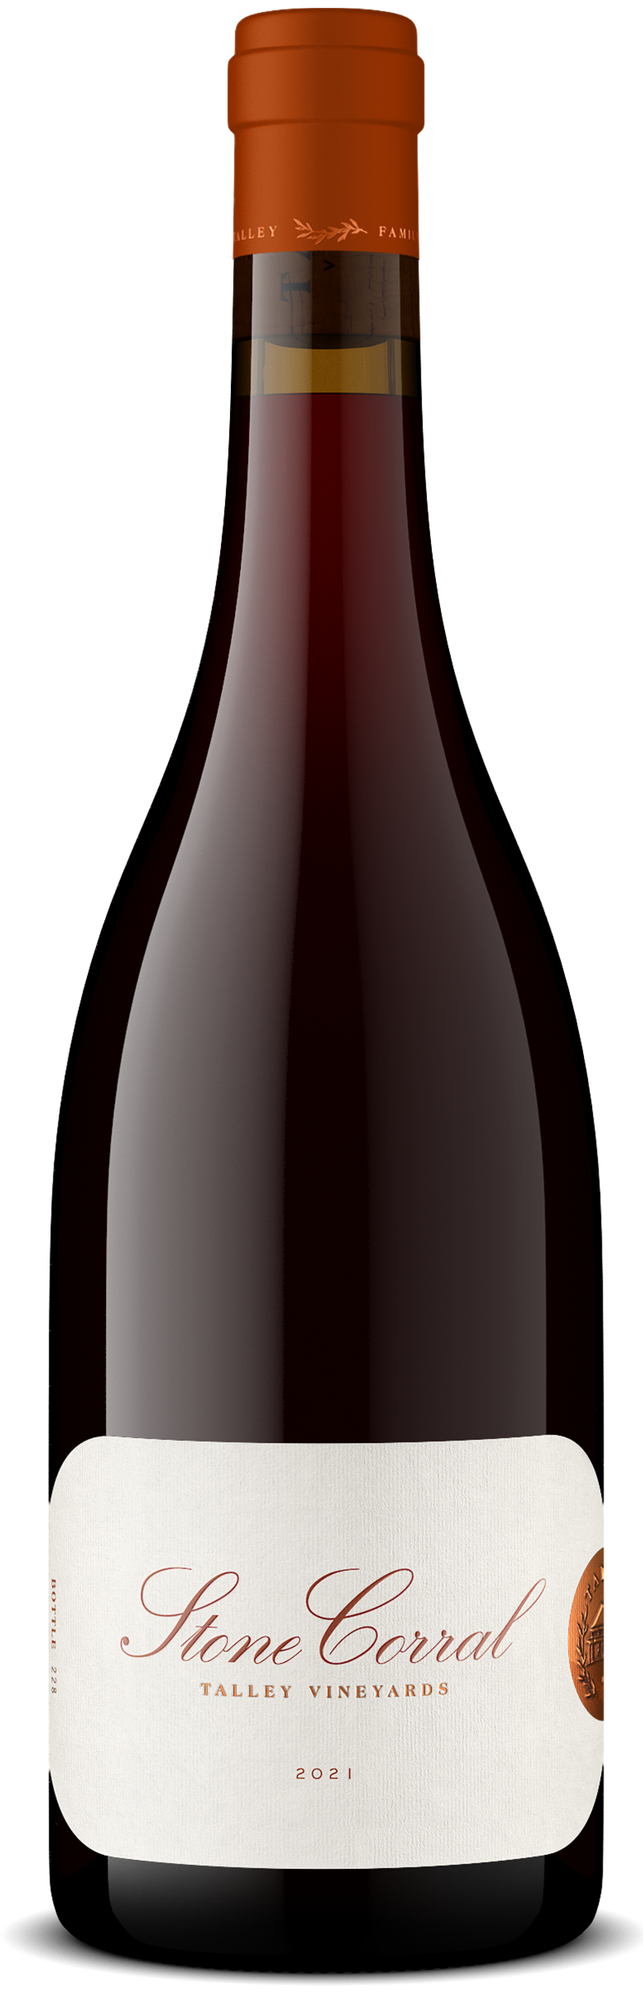 2021 Stone Corral Pinot Noir 1.5L